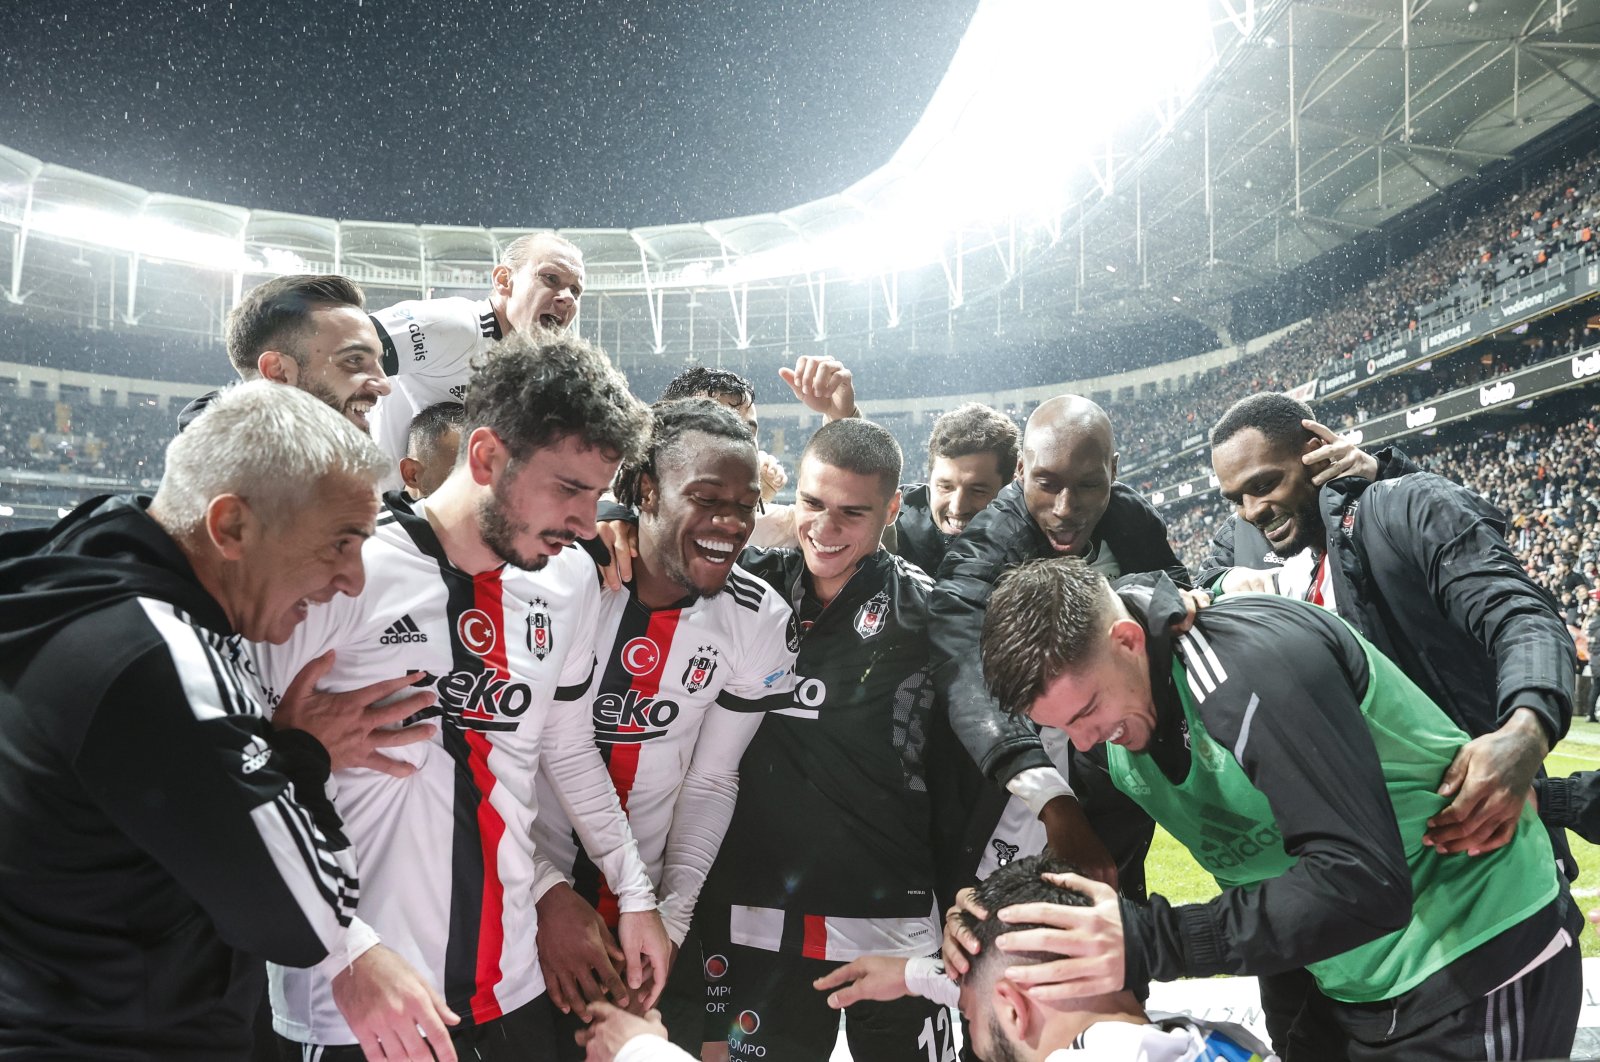 Beşiktaş&#039;s Güven Yalçın and teammates celebrate after scoring in the match with Yukatel Kayserispor in Istanbul, Turkey, Dec. 12, 2021. (AA Photo)